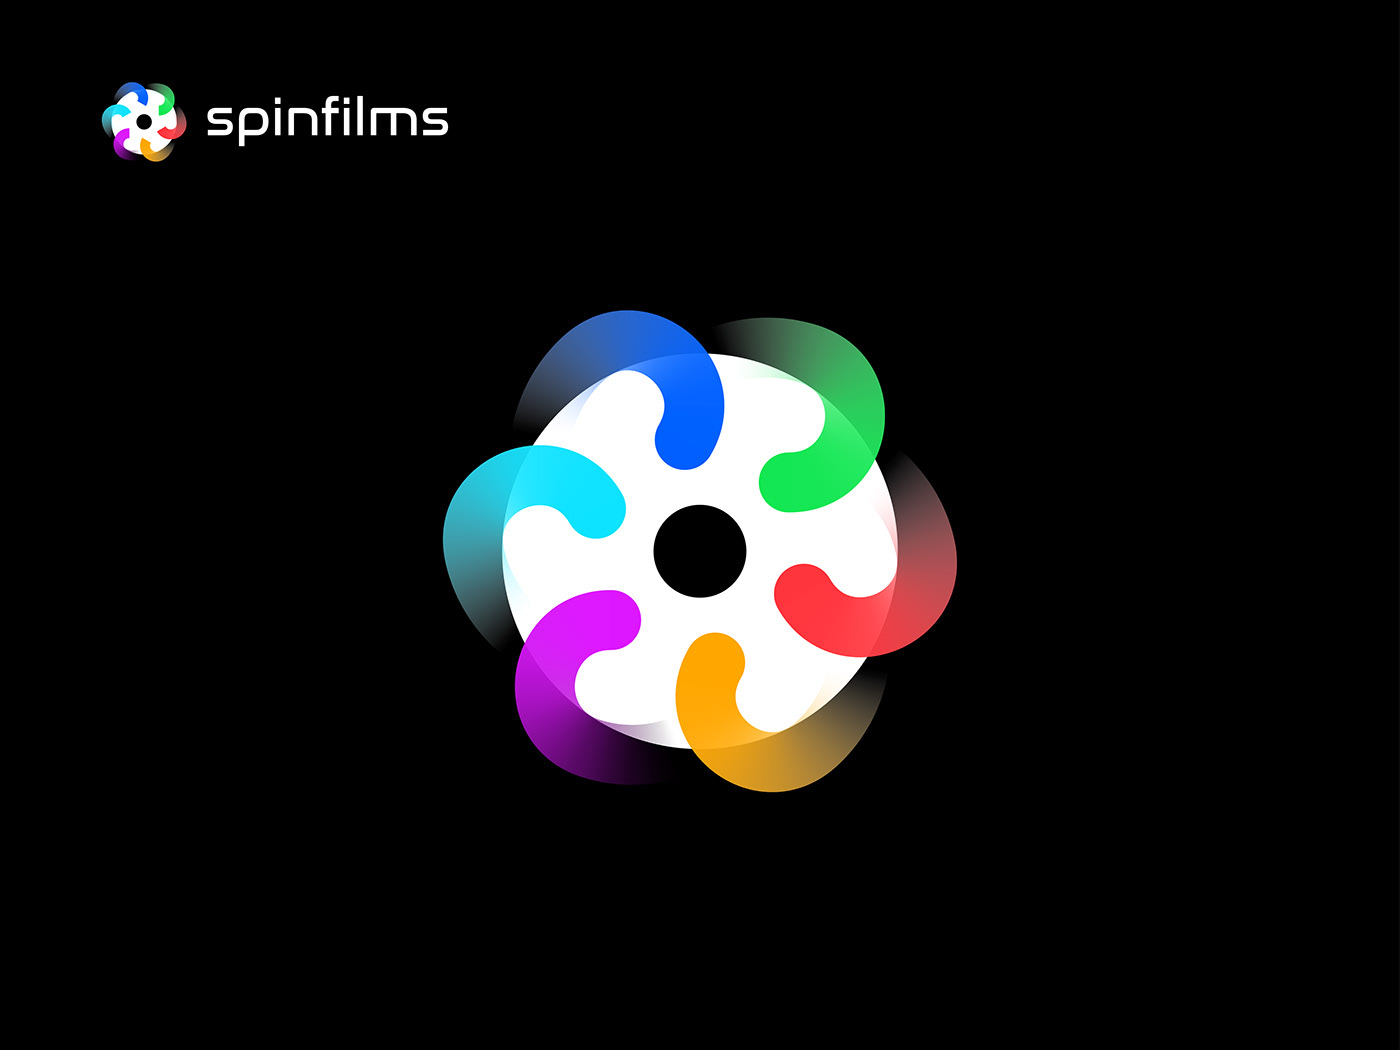 spin films logo,branding,logo design,production,modern logo,icon,brand identity,visual identity,reel